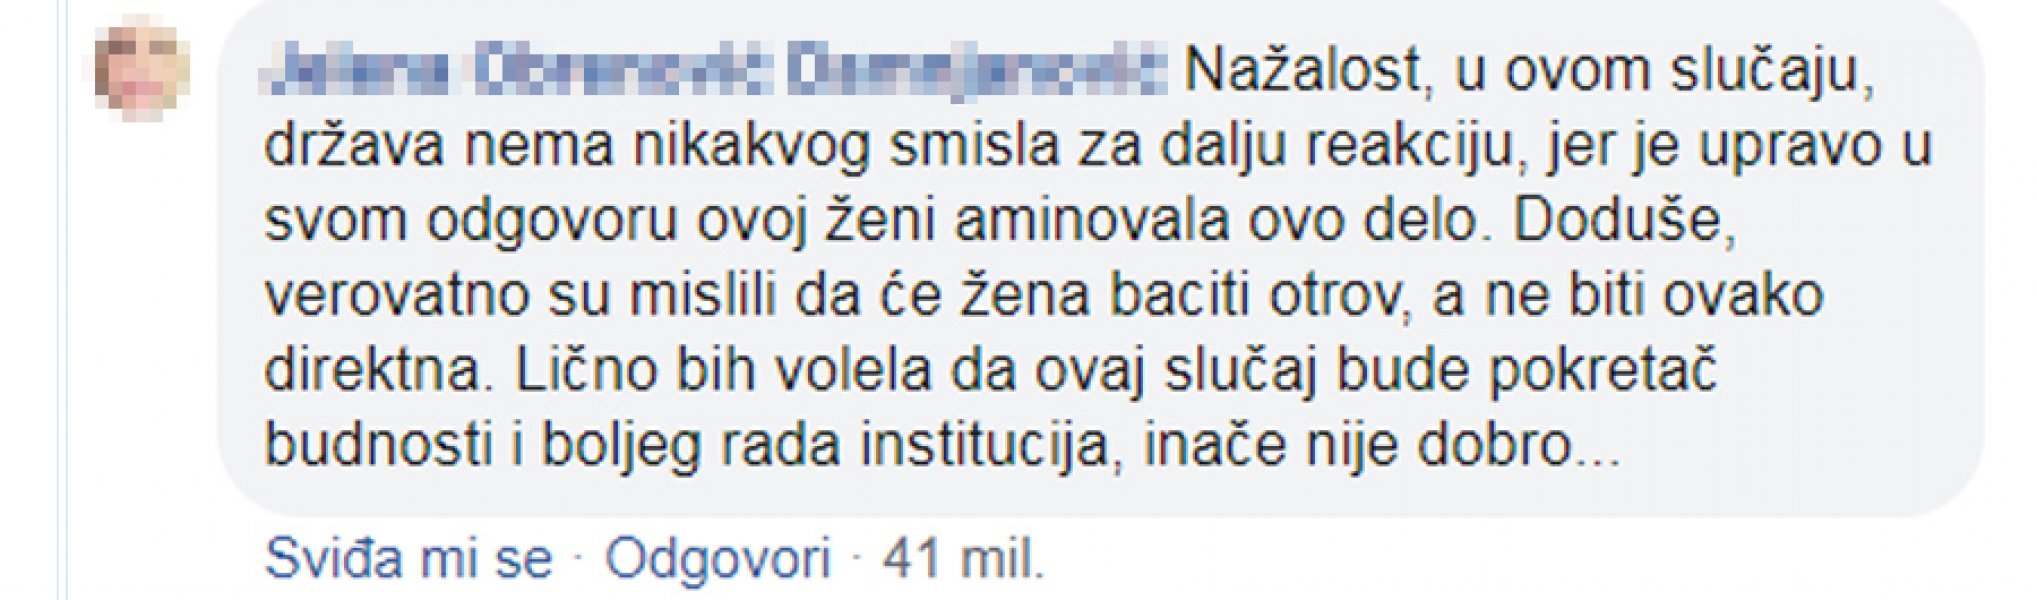 ana-kozarska-dubica-komentari7-foto-screenshot-facebook